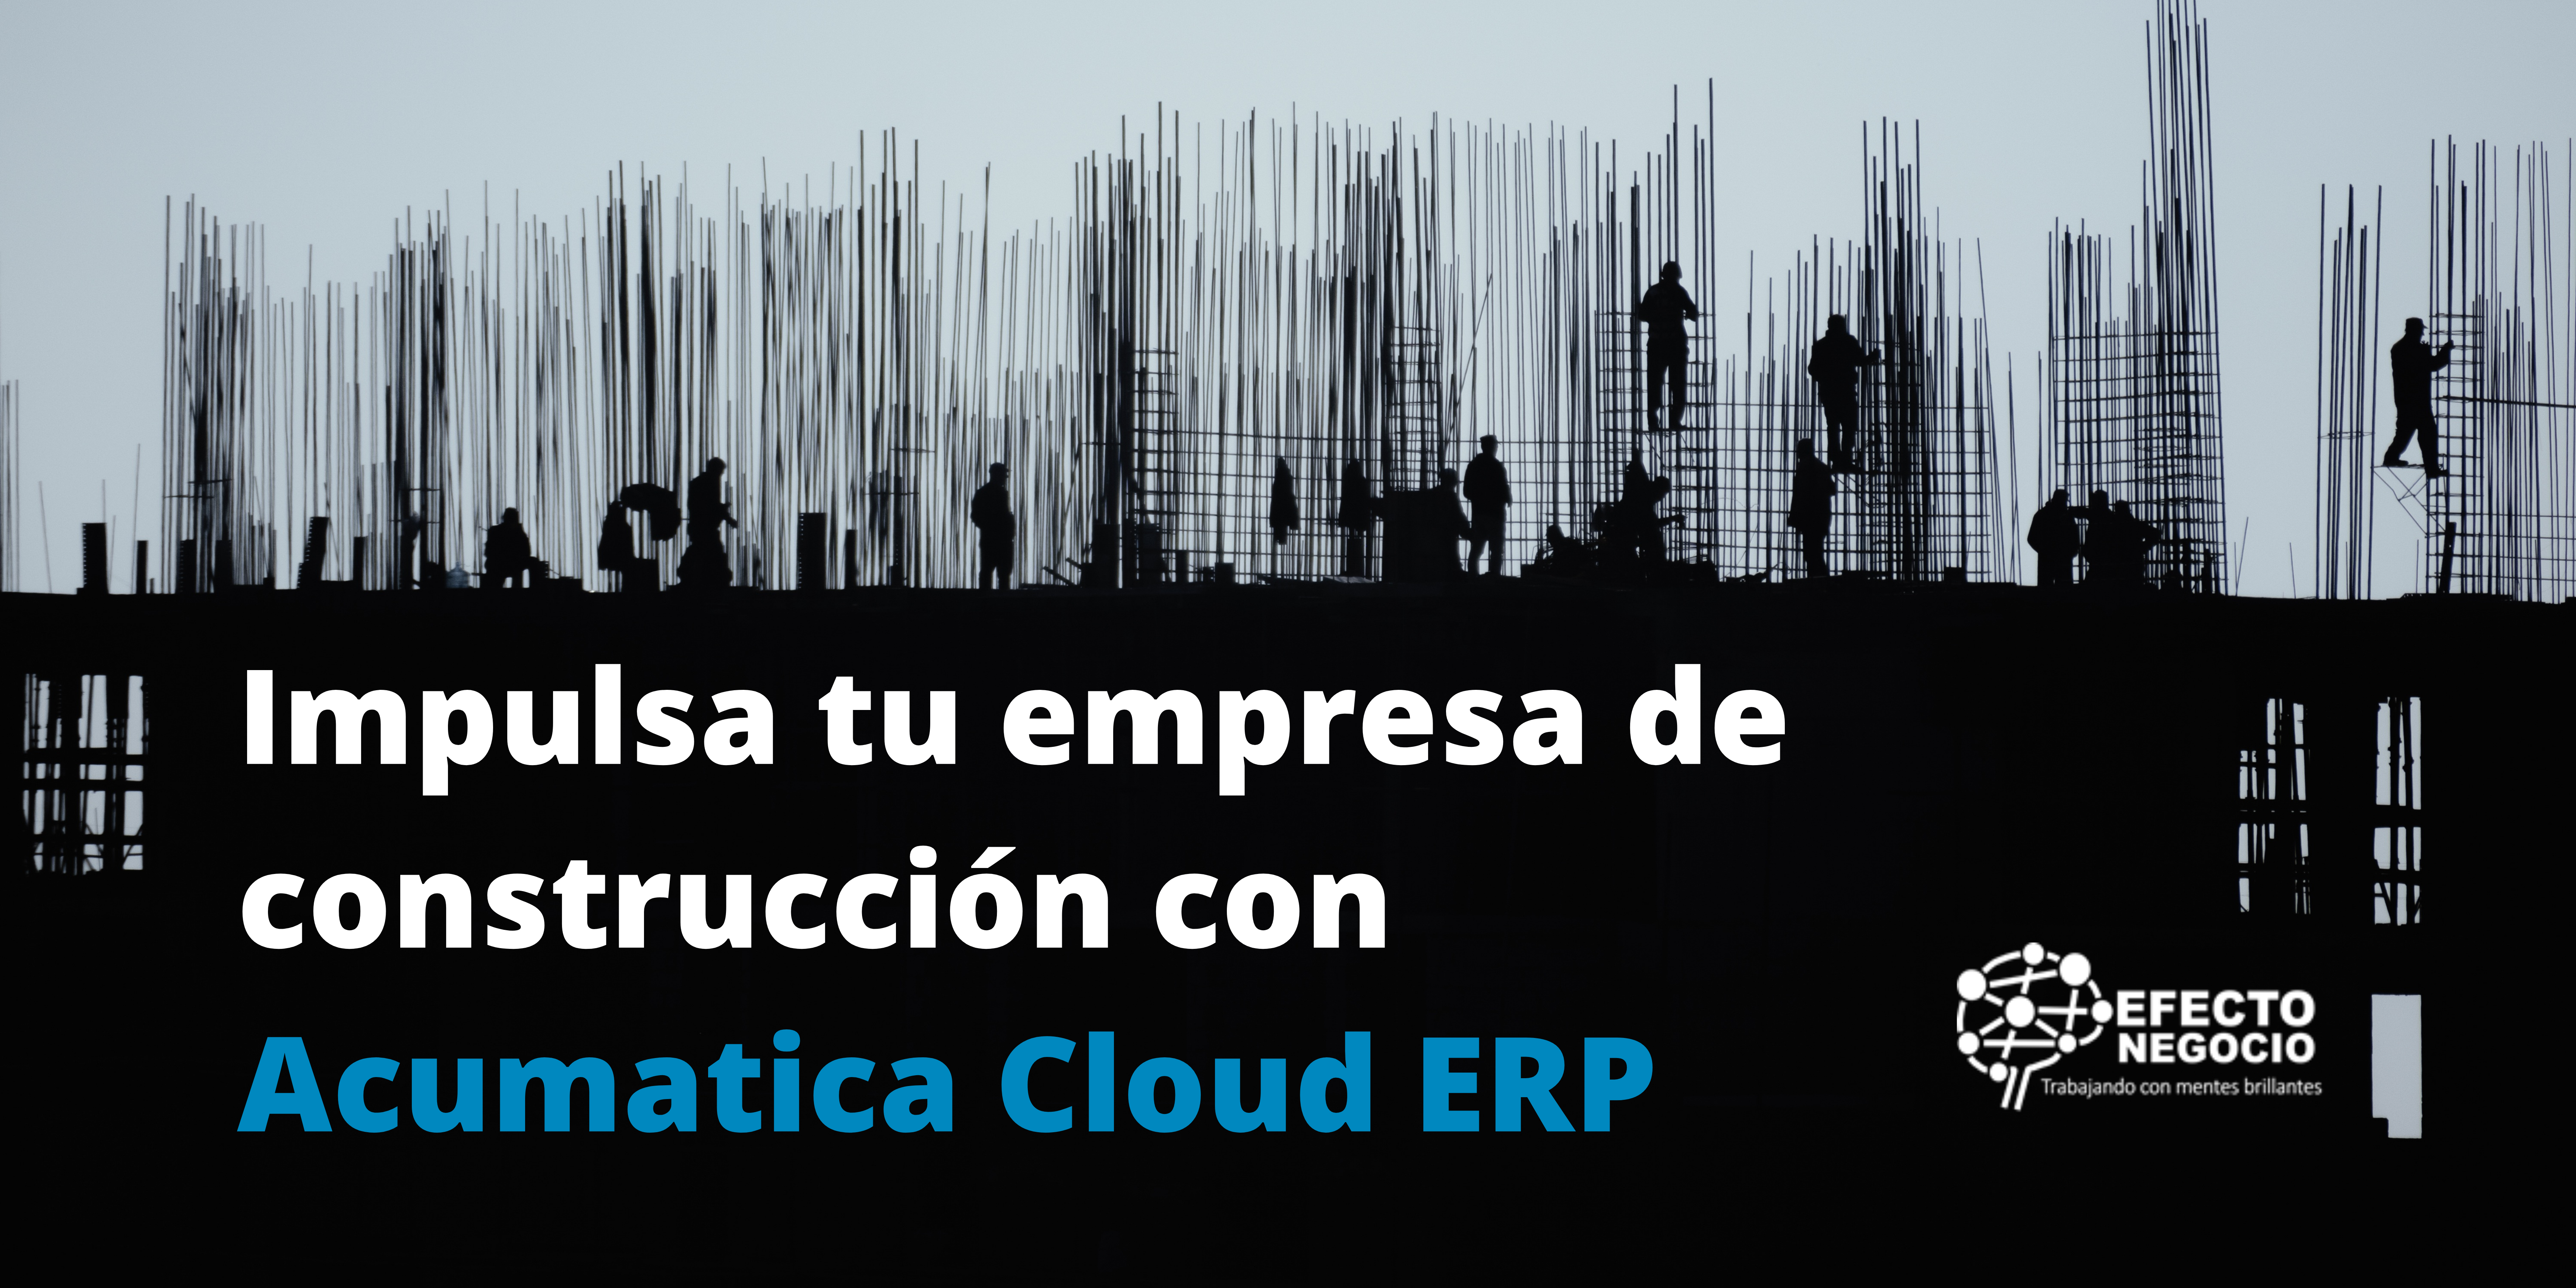 Impulsa tu empresa de construcción con Acumatica Cloud ERP